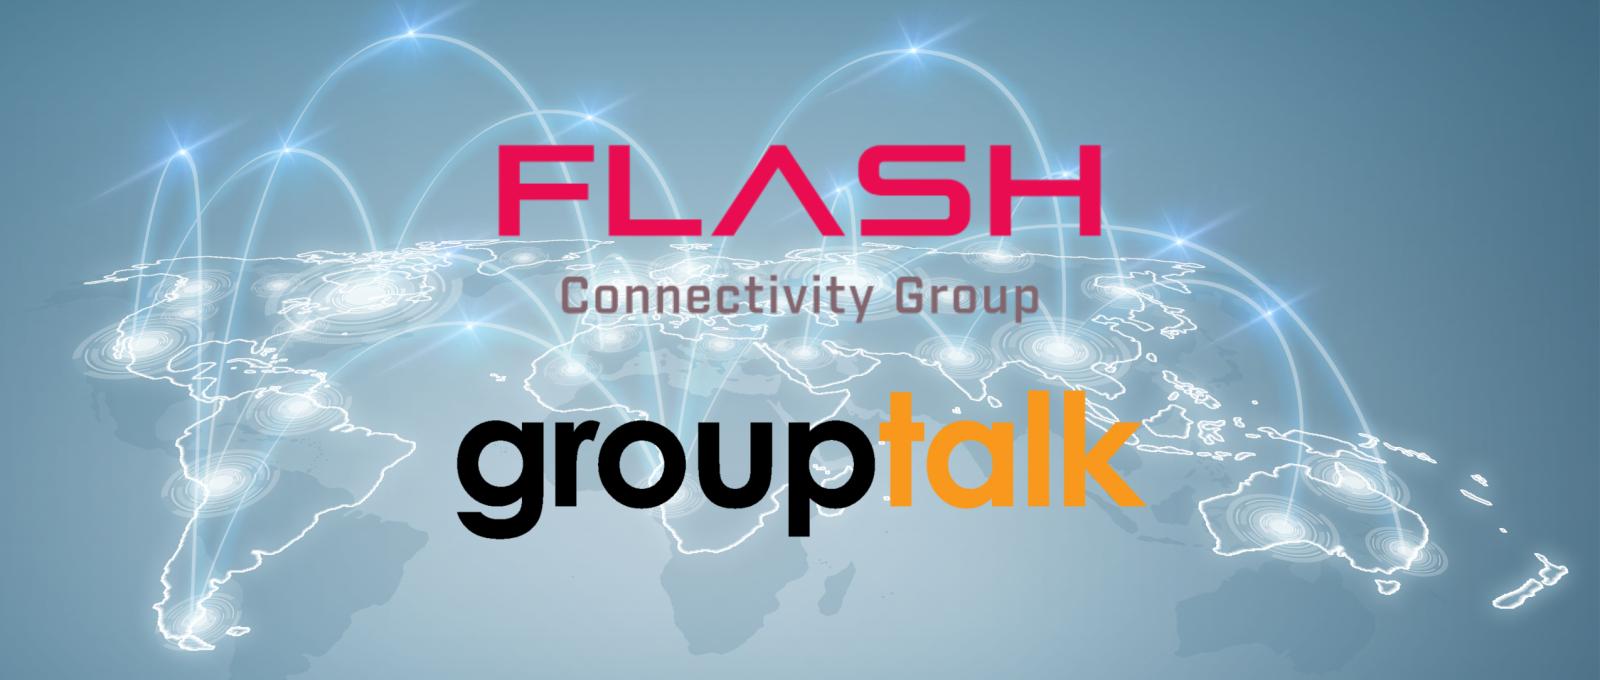 GroupTalk och Flash connectivity group loggor